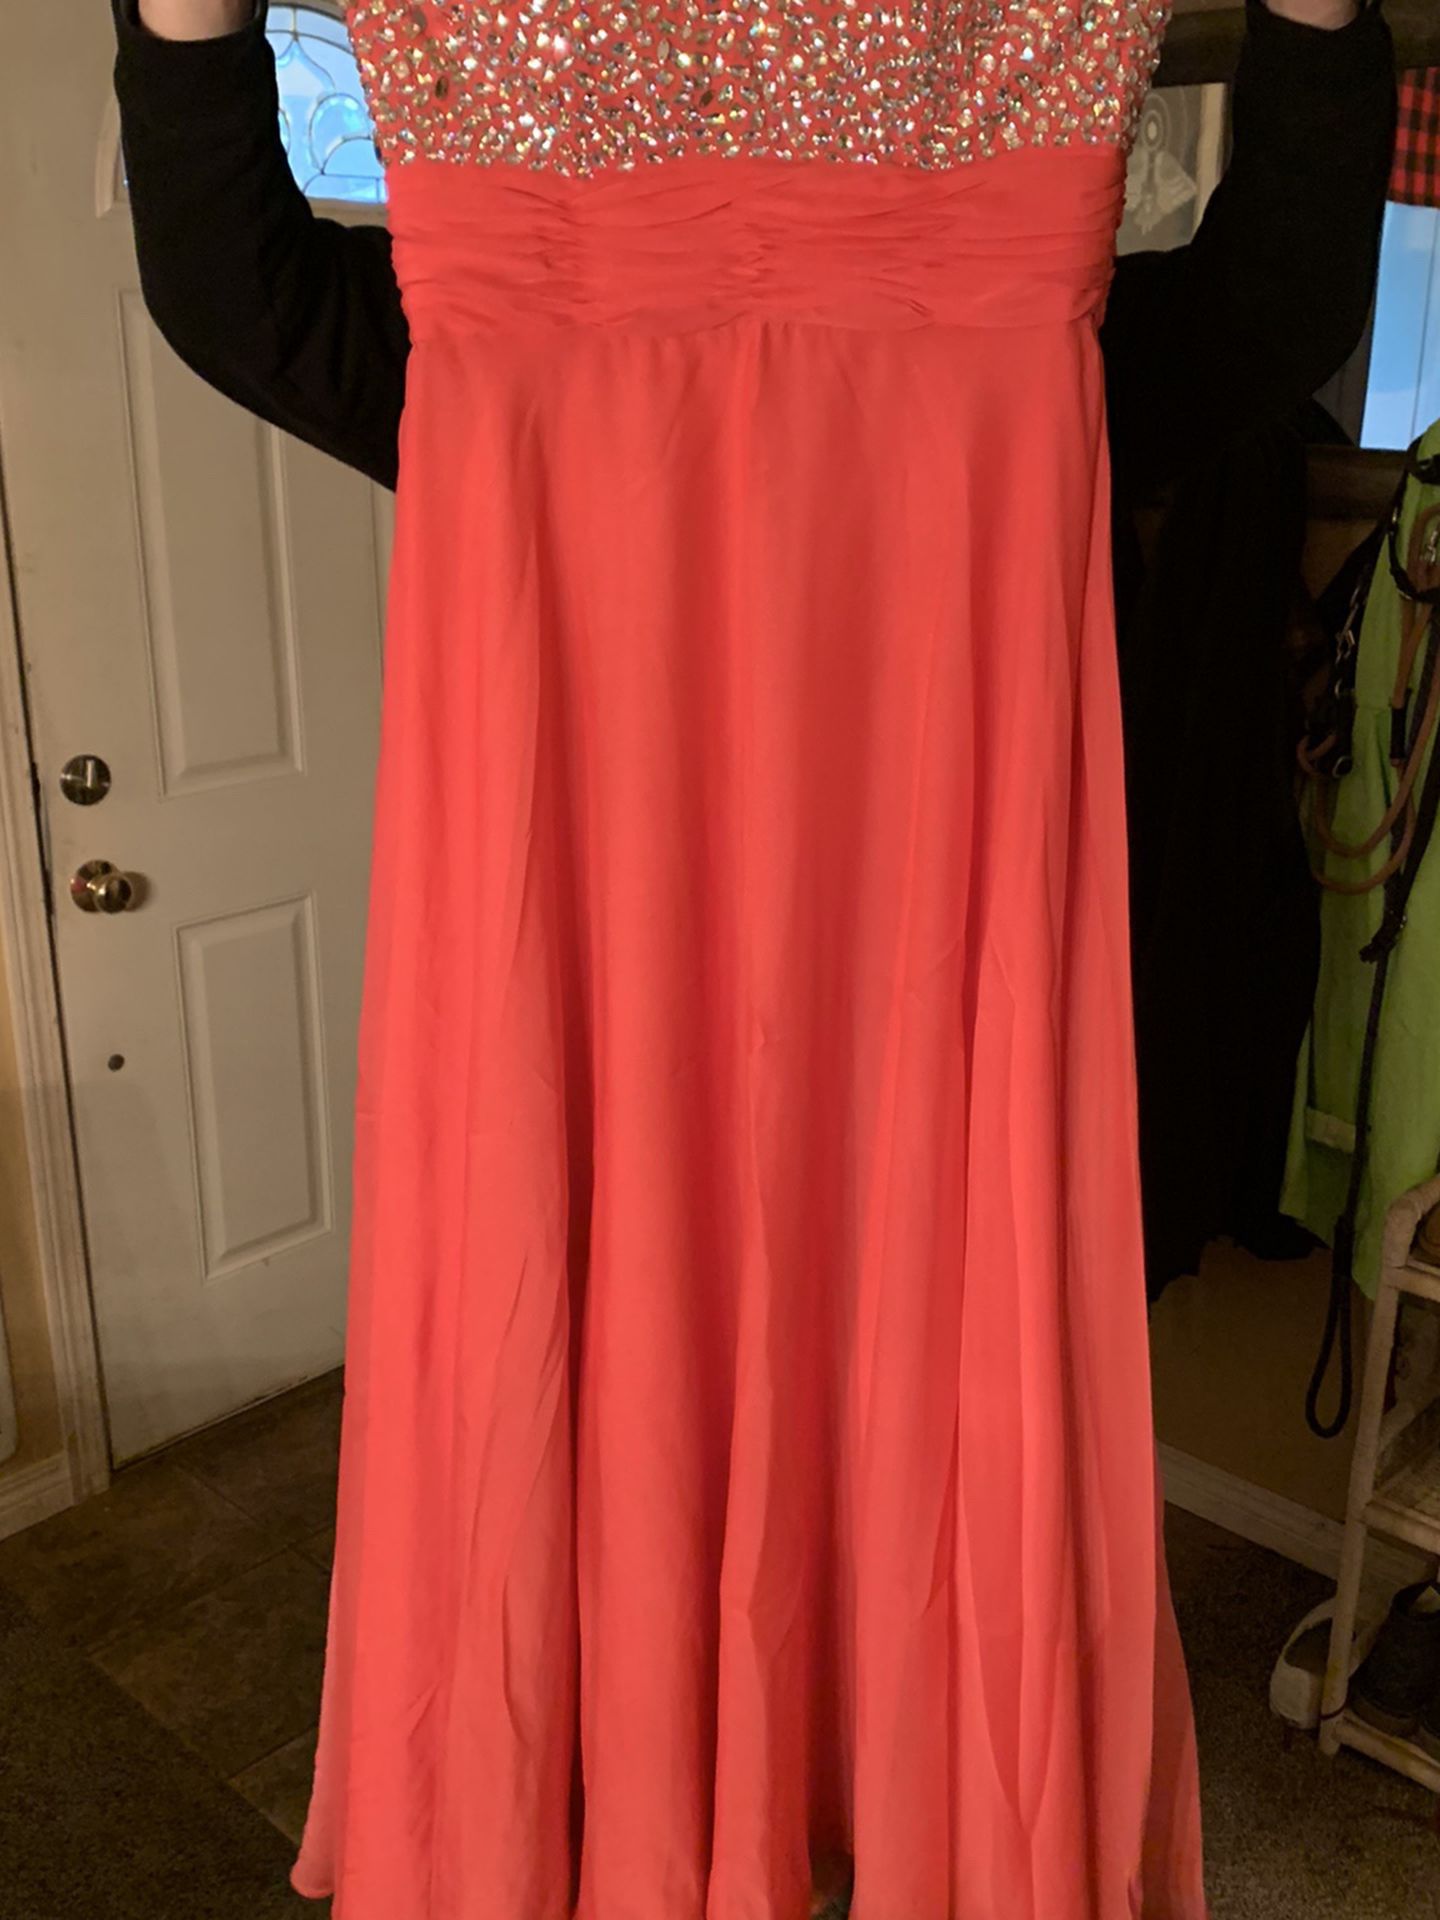 Prom/homecoming Dress